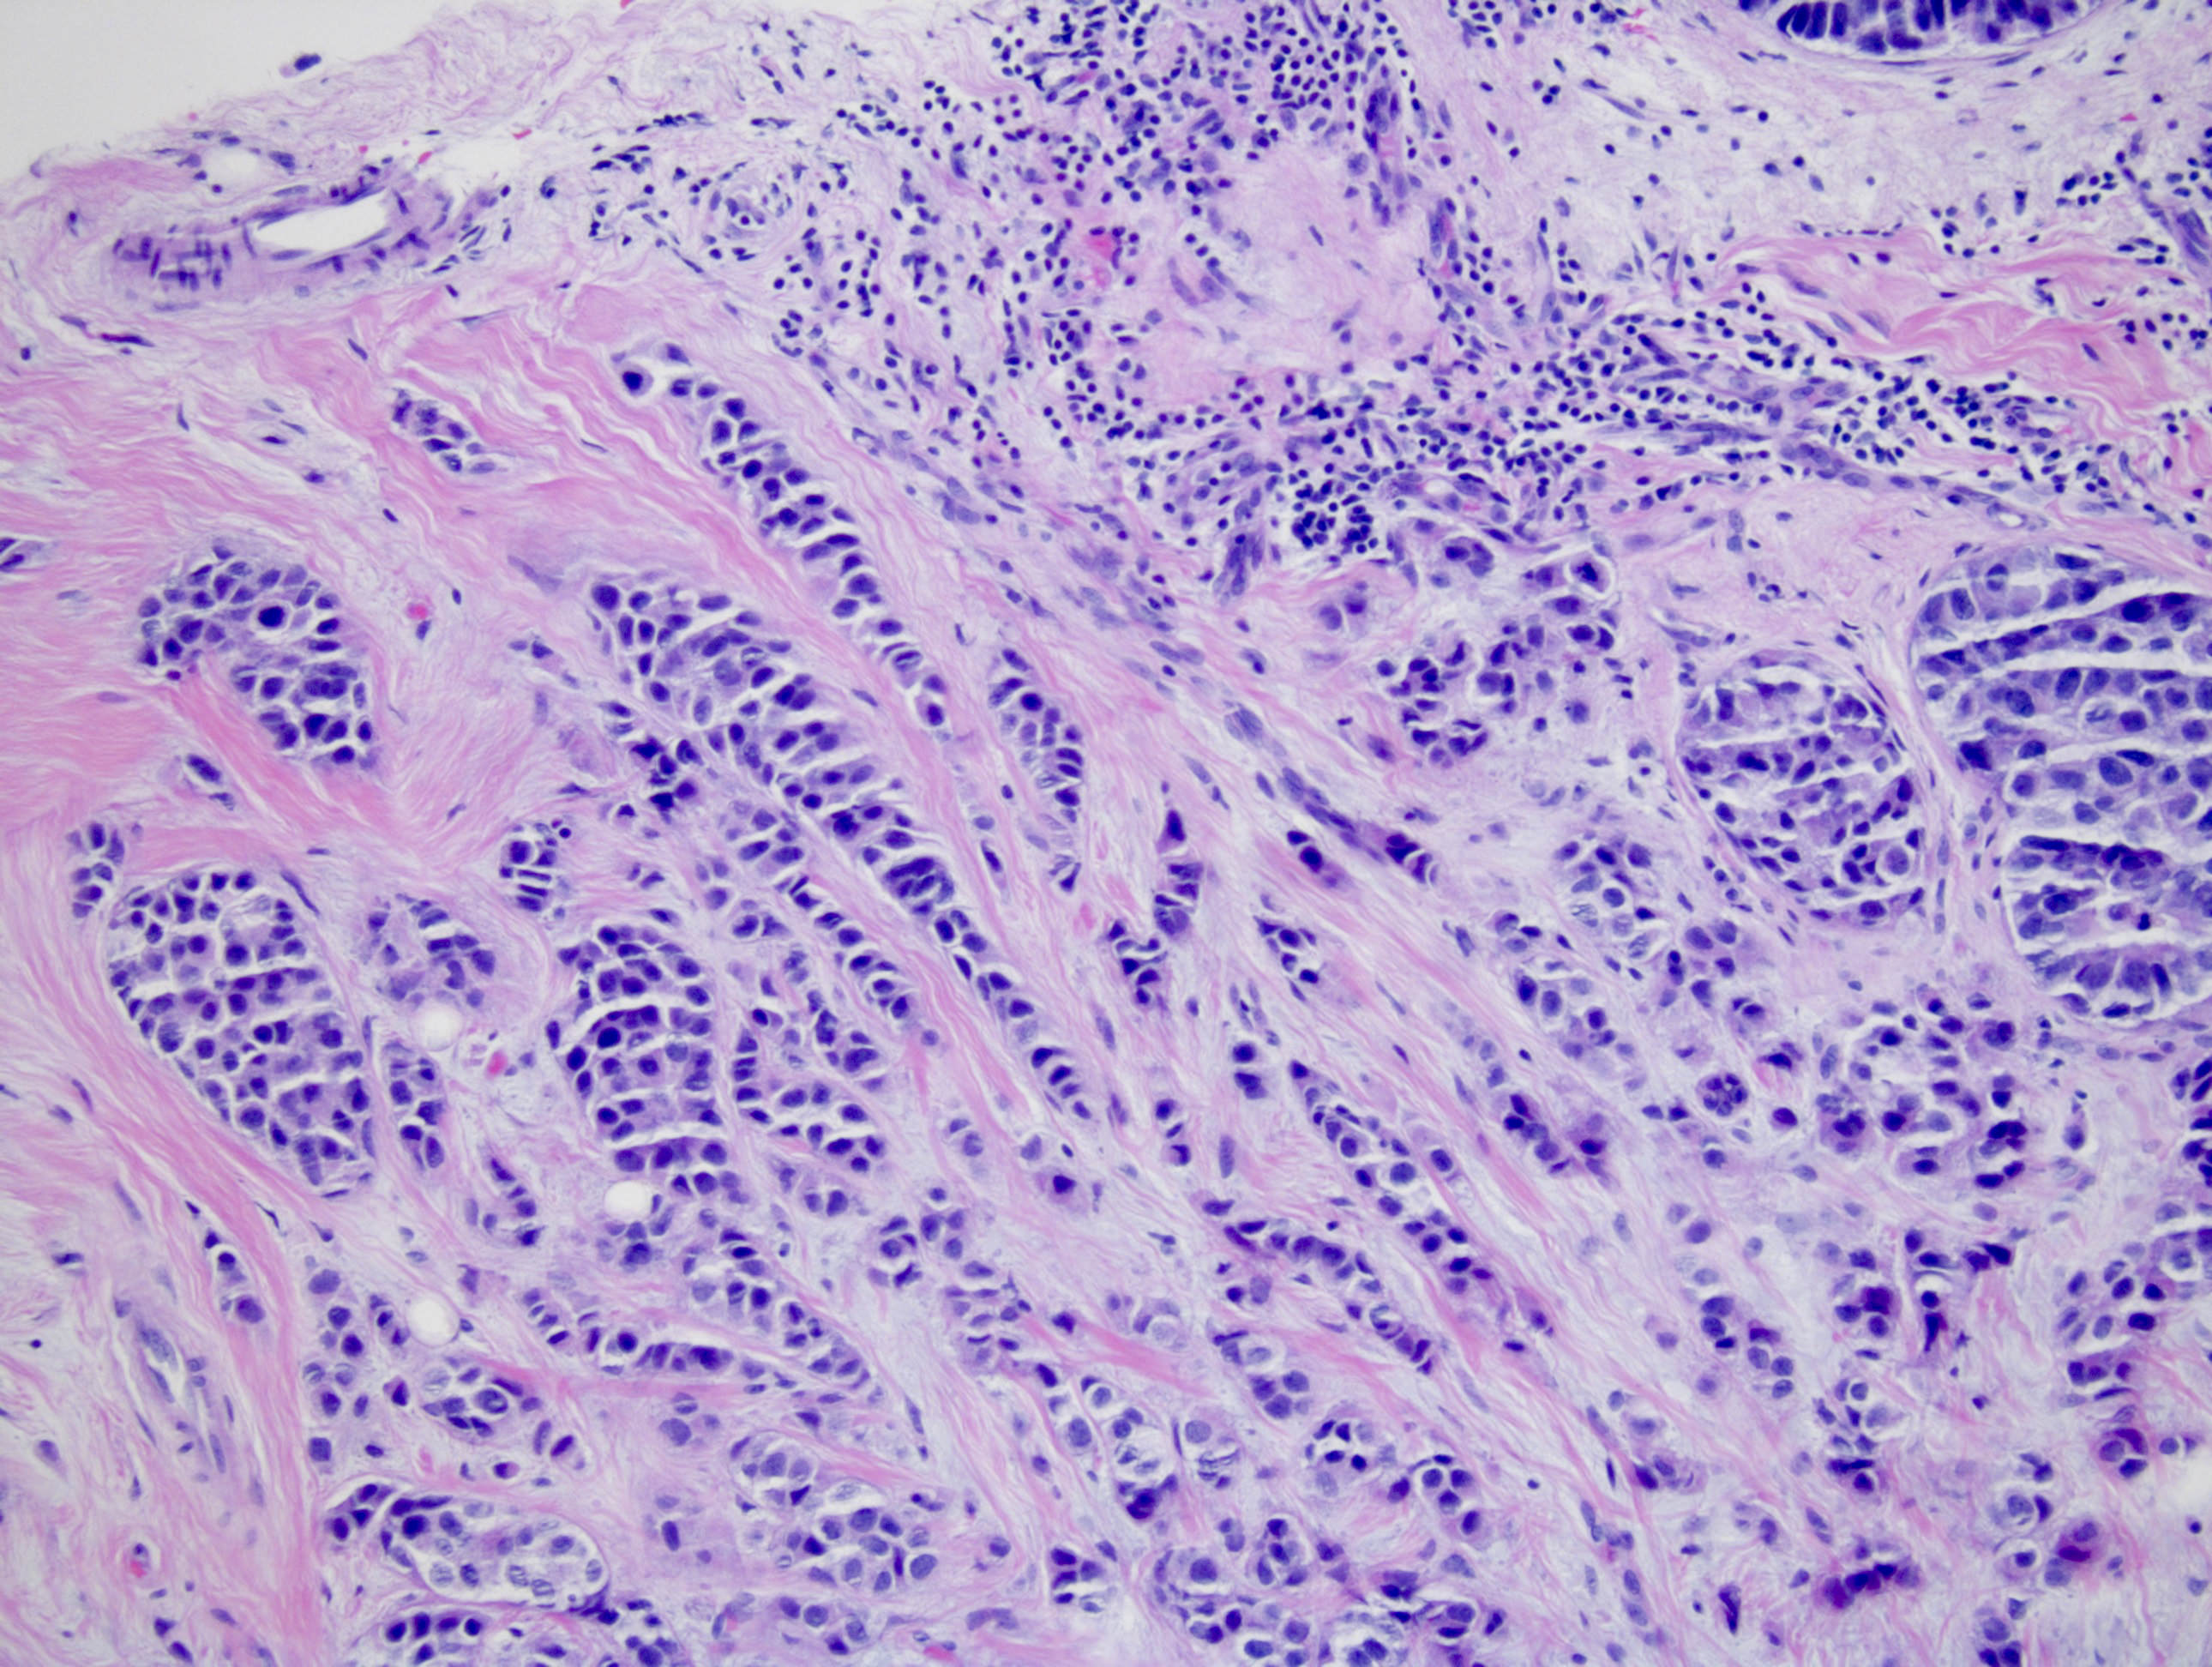 Invasive ductal carcinoma breast